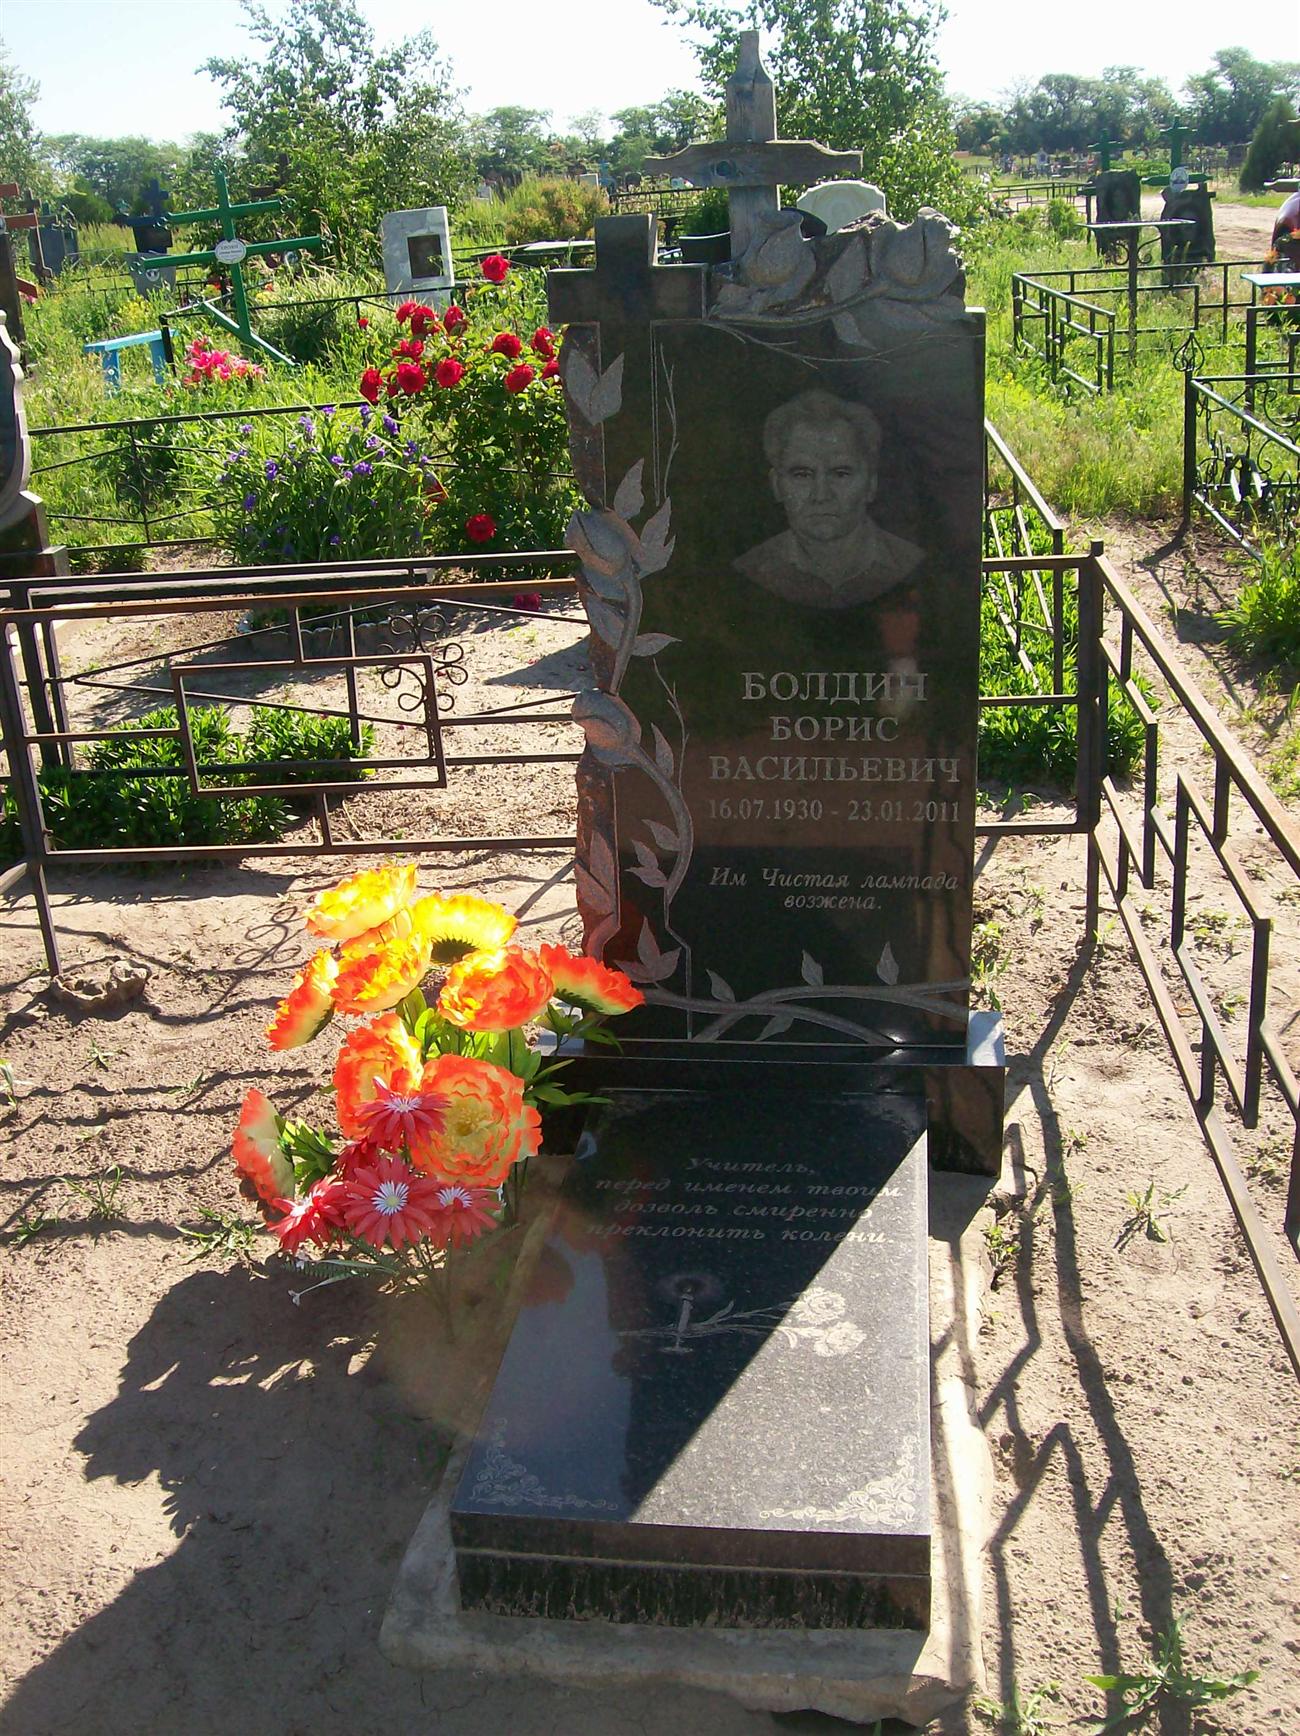 Фото: Памятник учителю Болдину Борису Васильевичу.